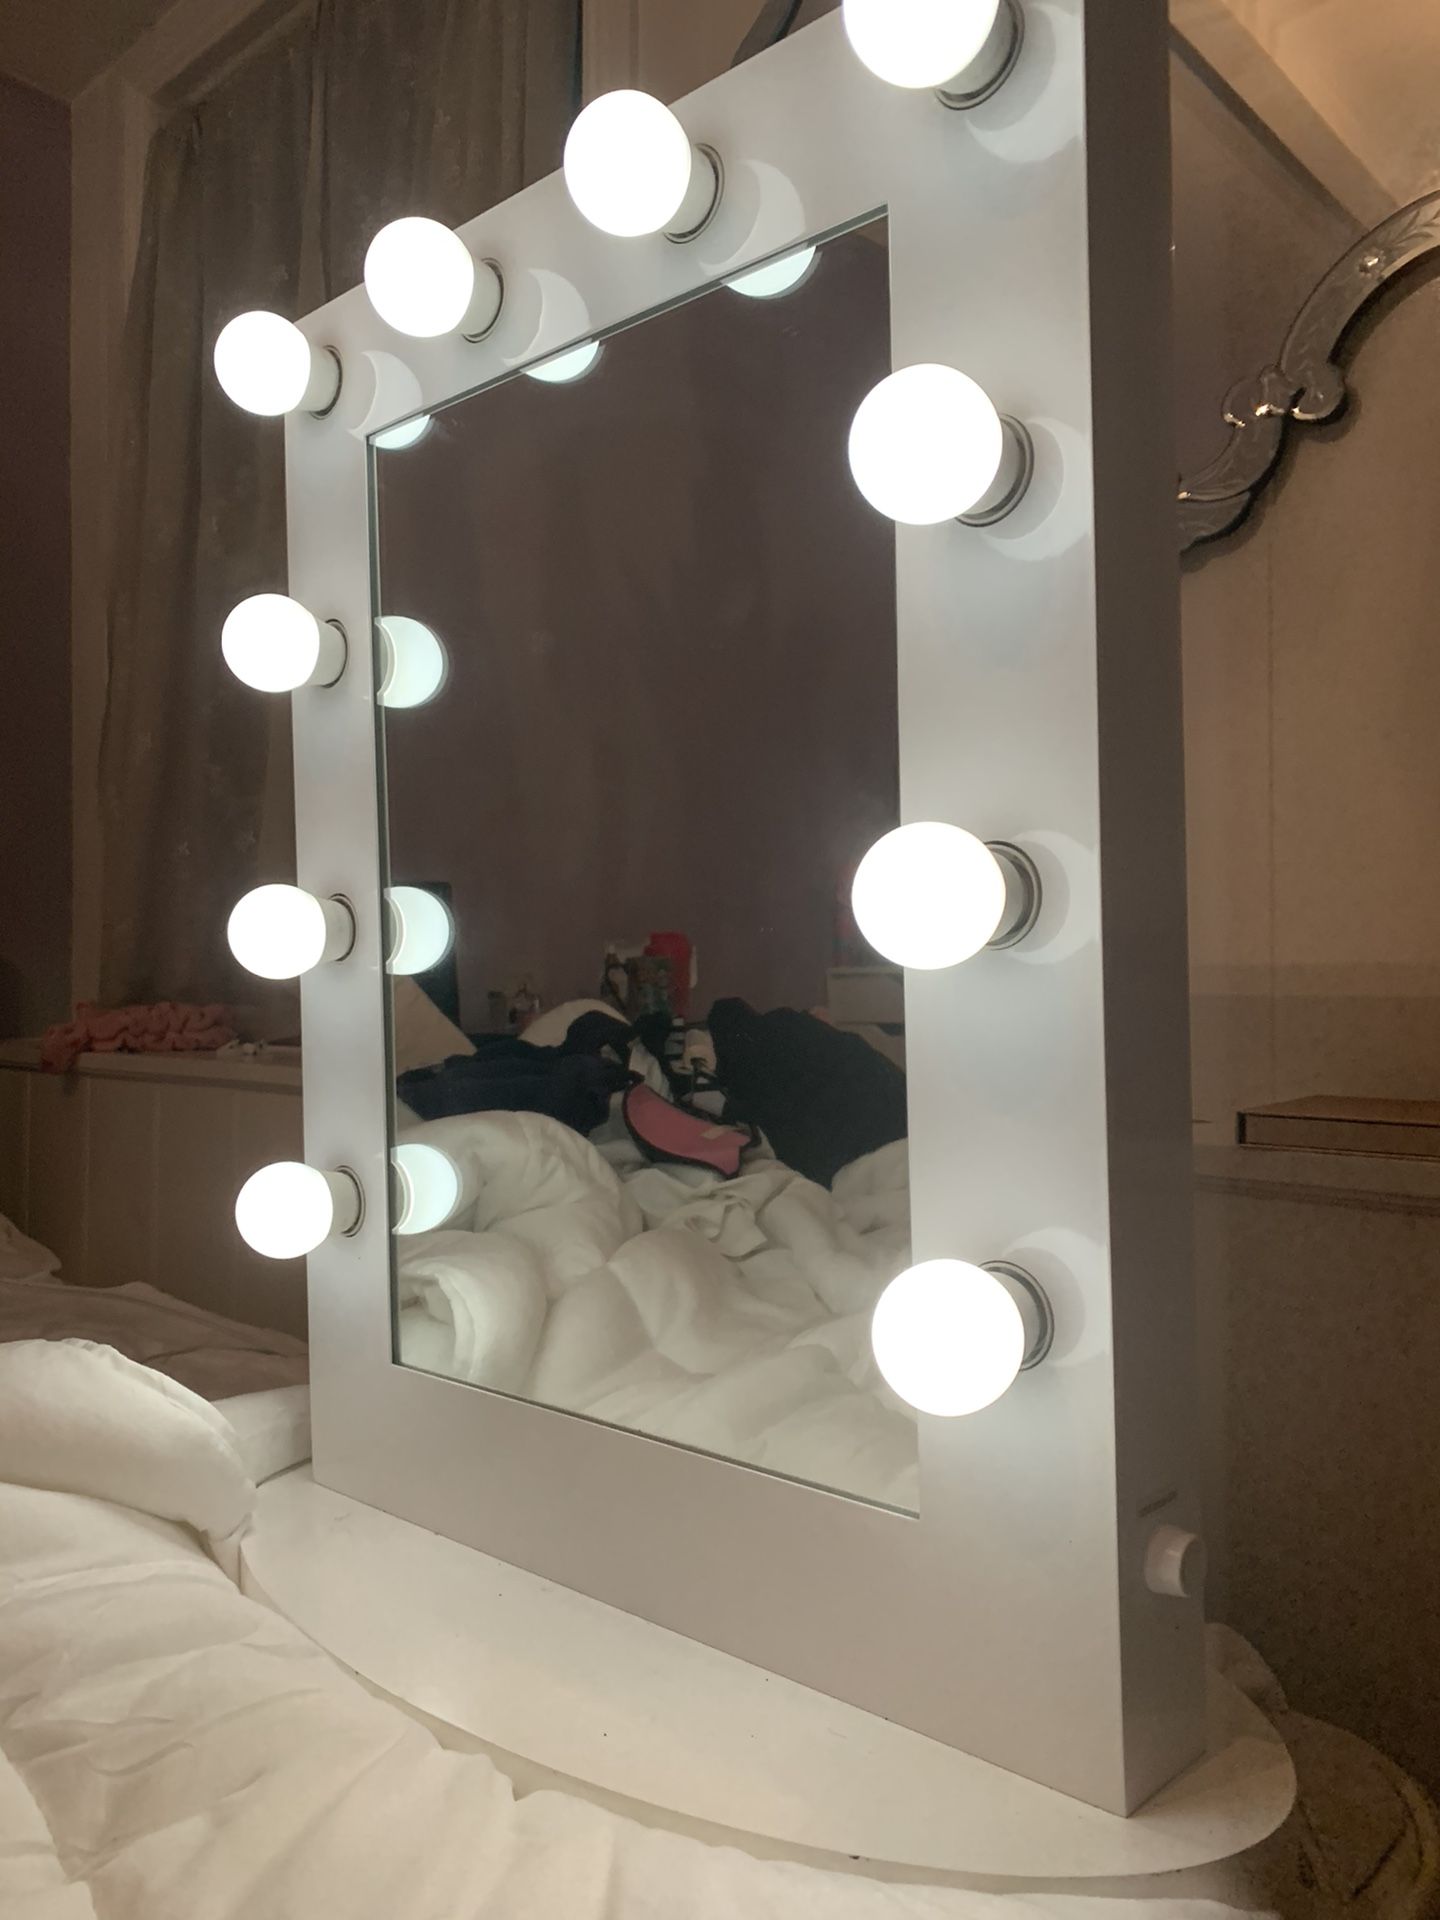 Perfect condition vanity mirror